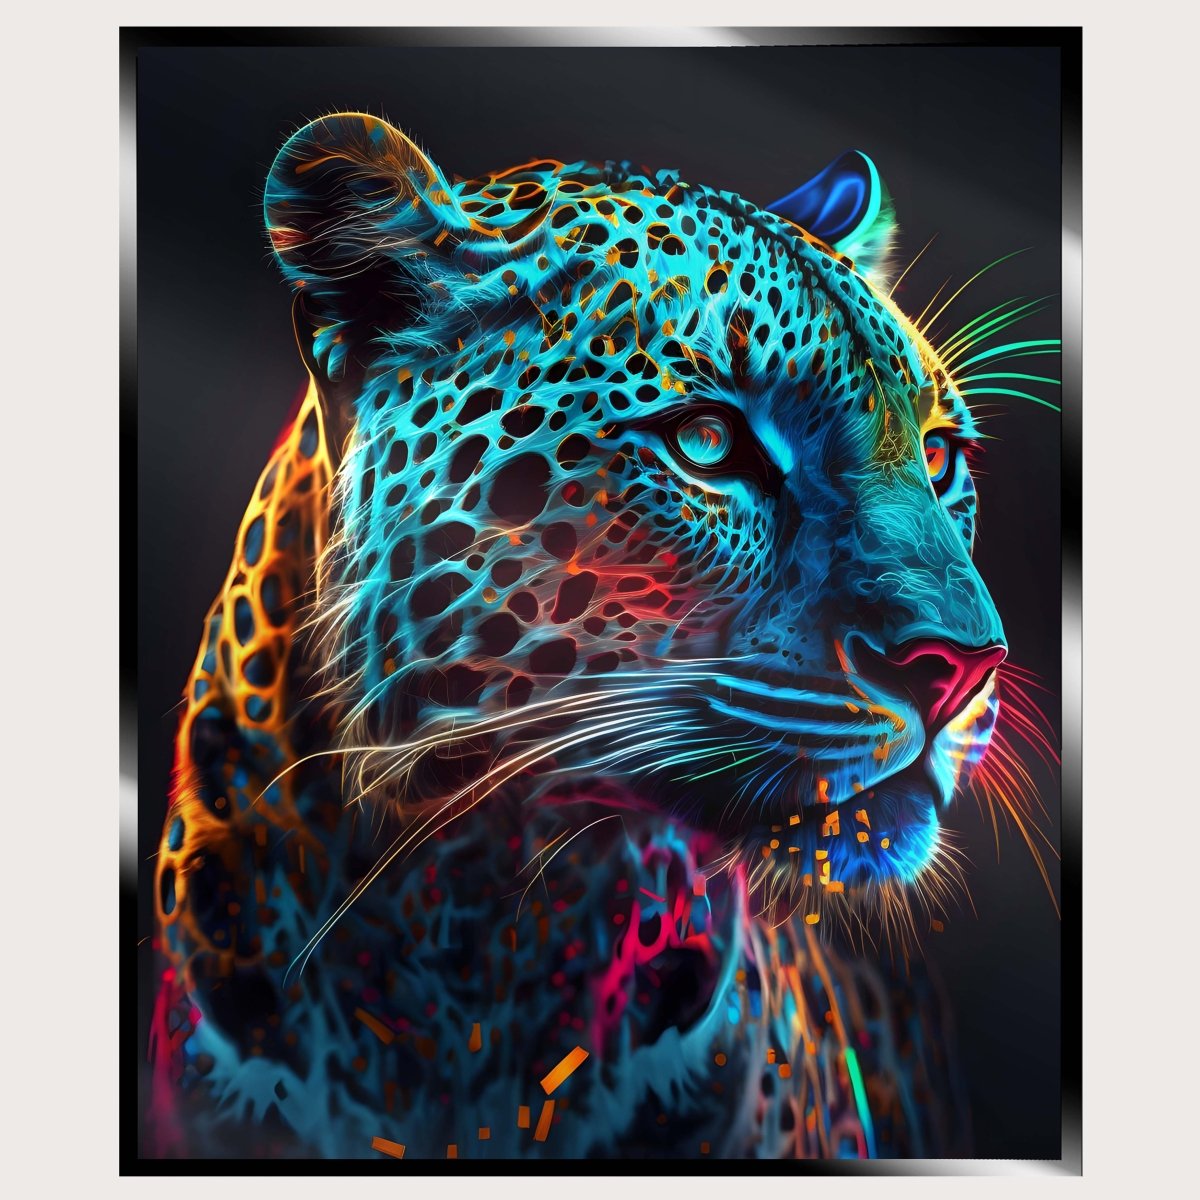 Illuminated Wall Art - Blue Leopard - madaboutneon